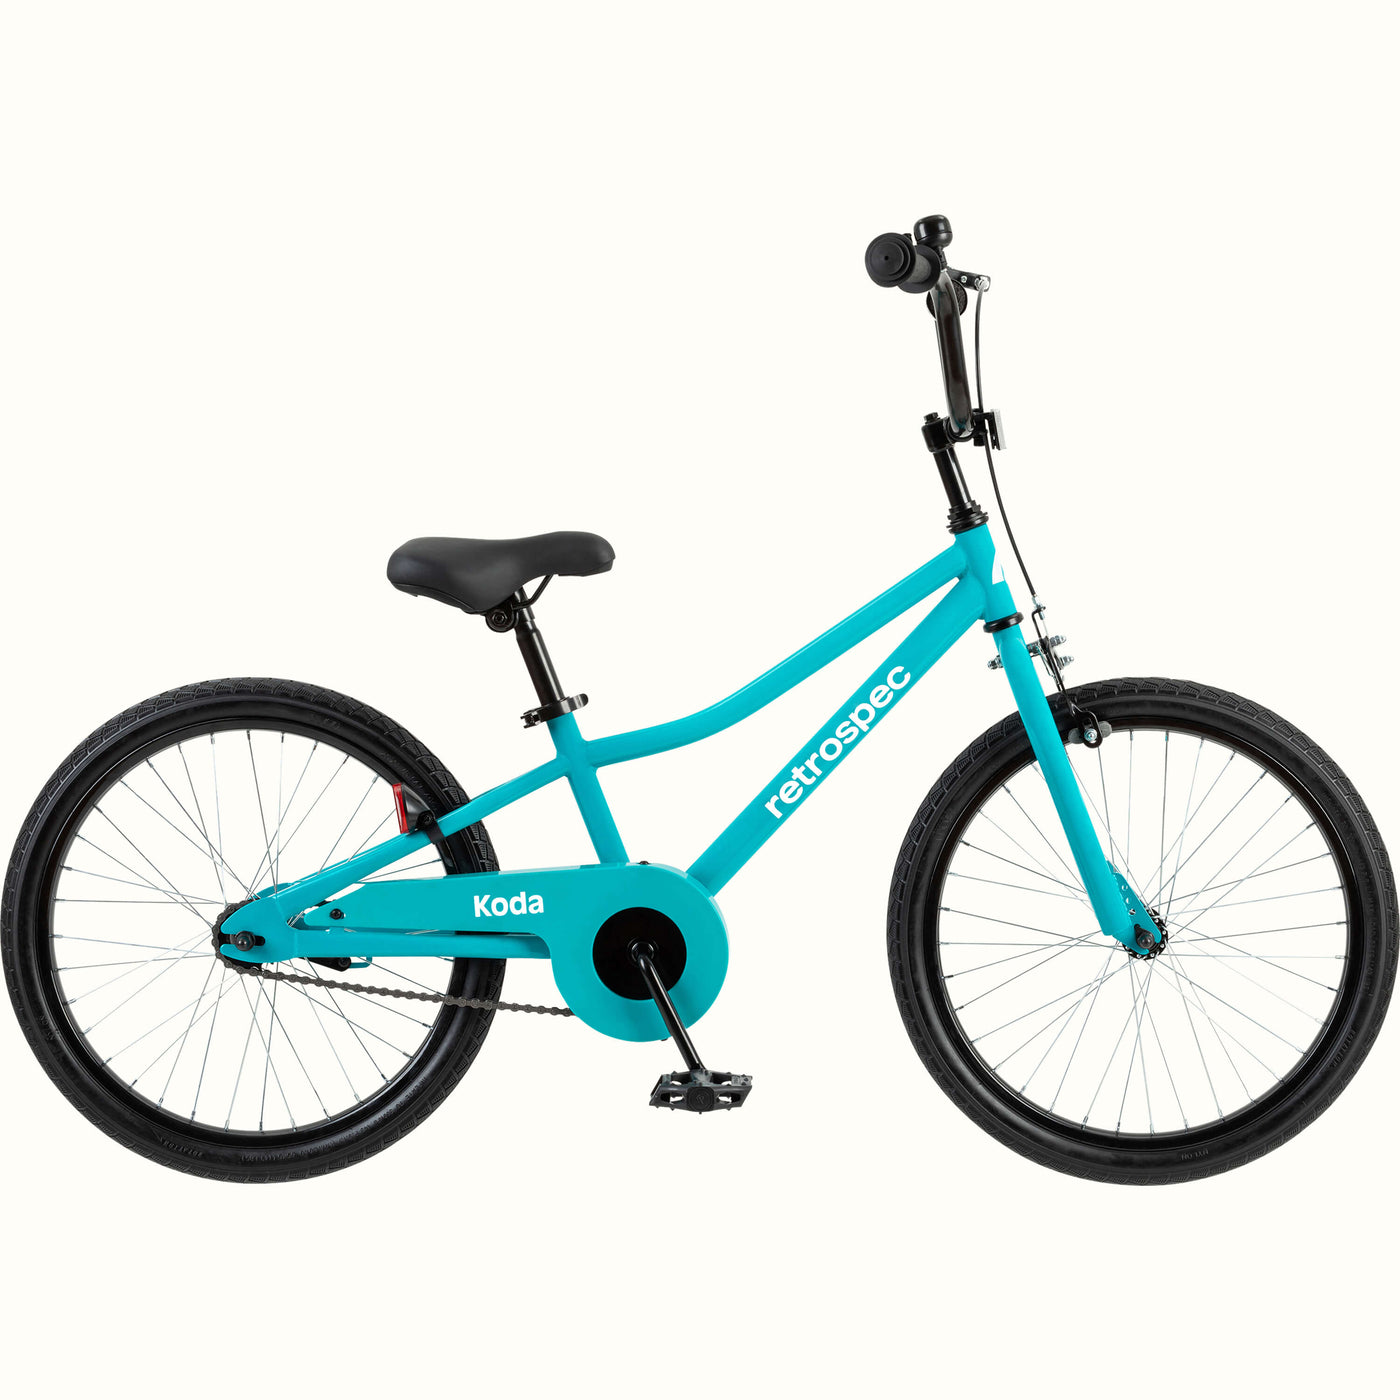 Koda 20" Kids' Bike (6-8 yrs) | Teal